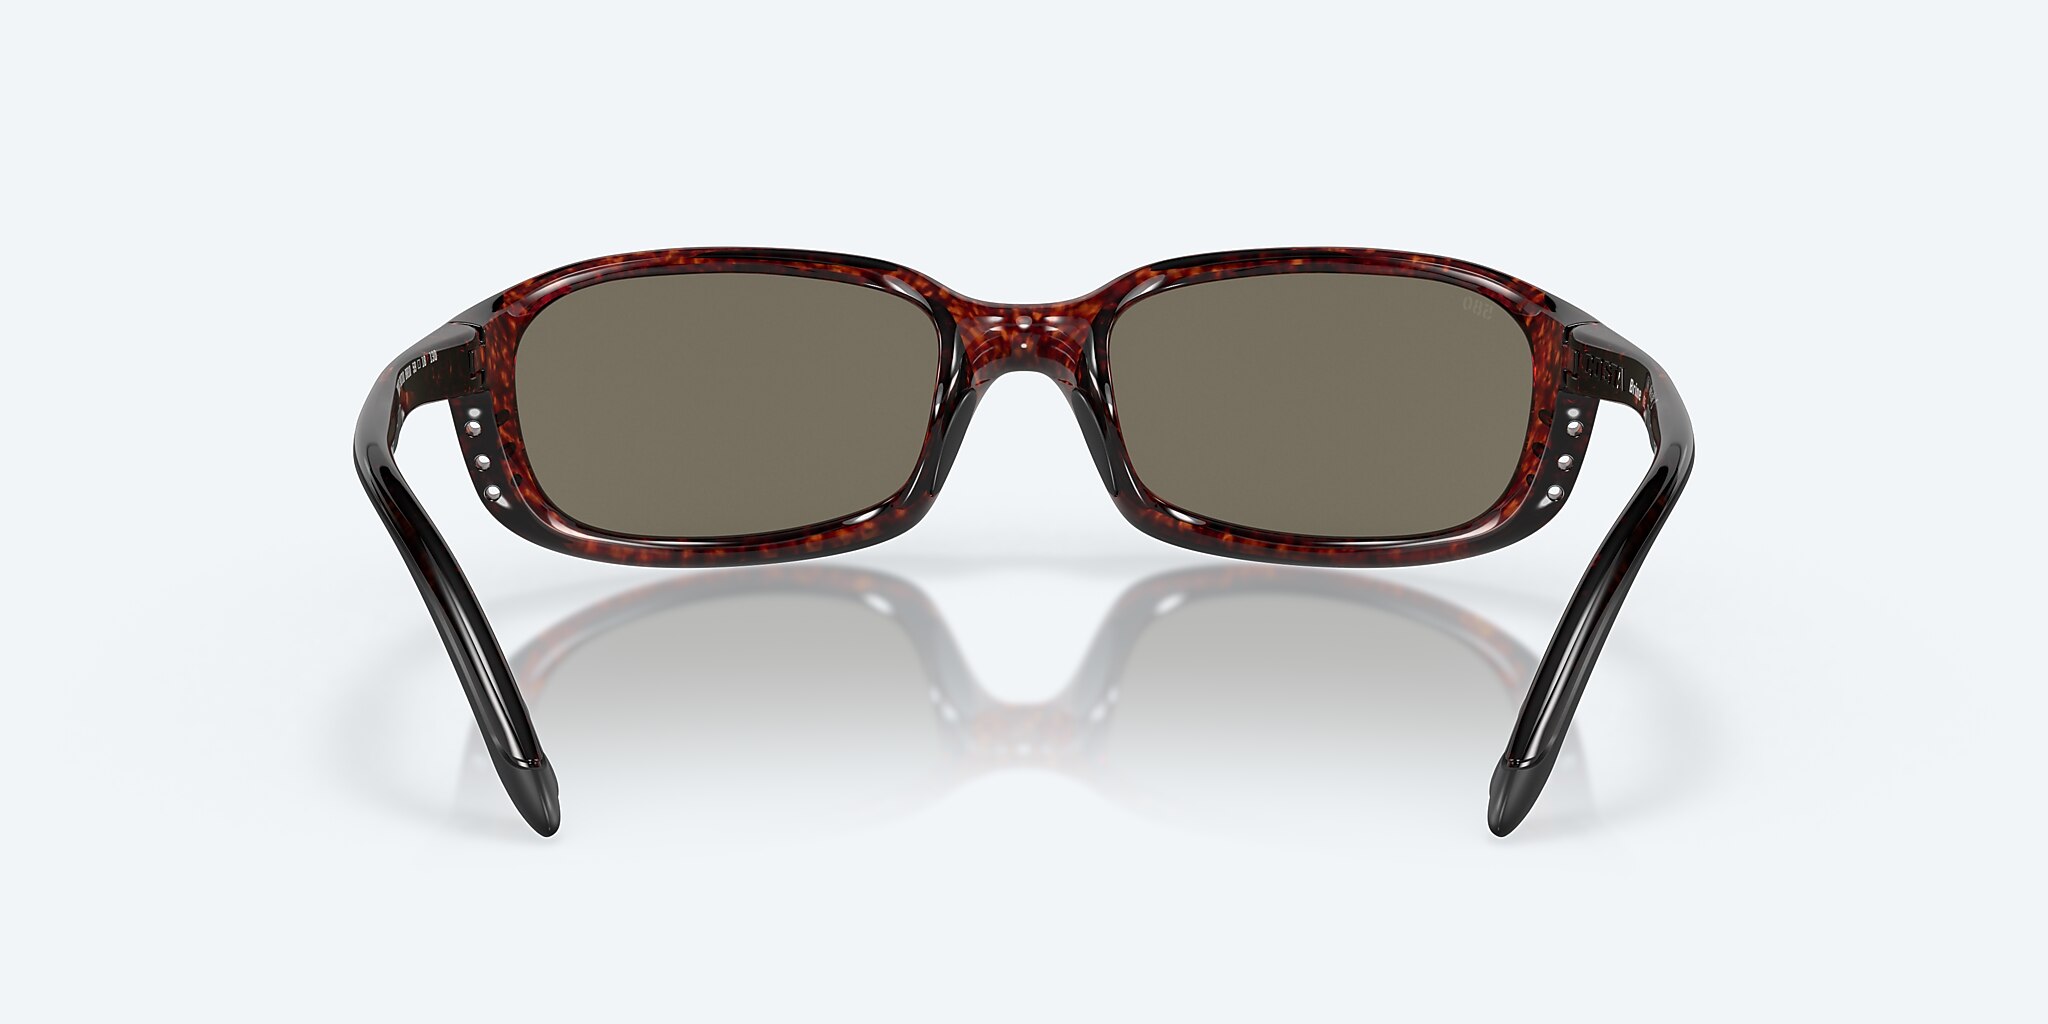 Atlantic Blue & Warm Tortoise Square Eco Friendly,Plastic Sunglasses Online - Full-Rim - Ocean - 1.6 Basic Tint Lenses